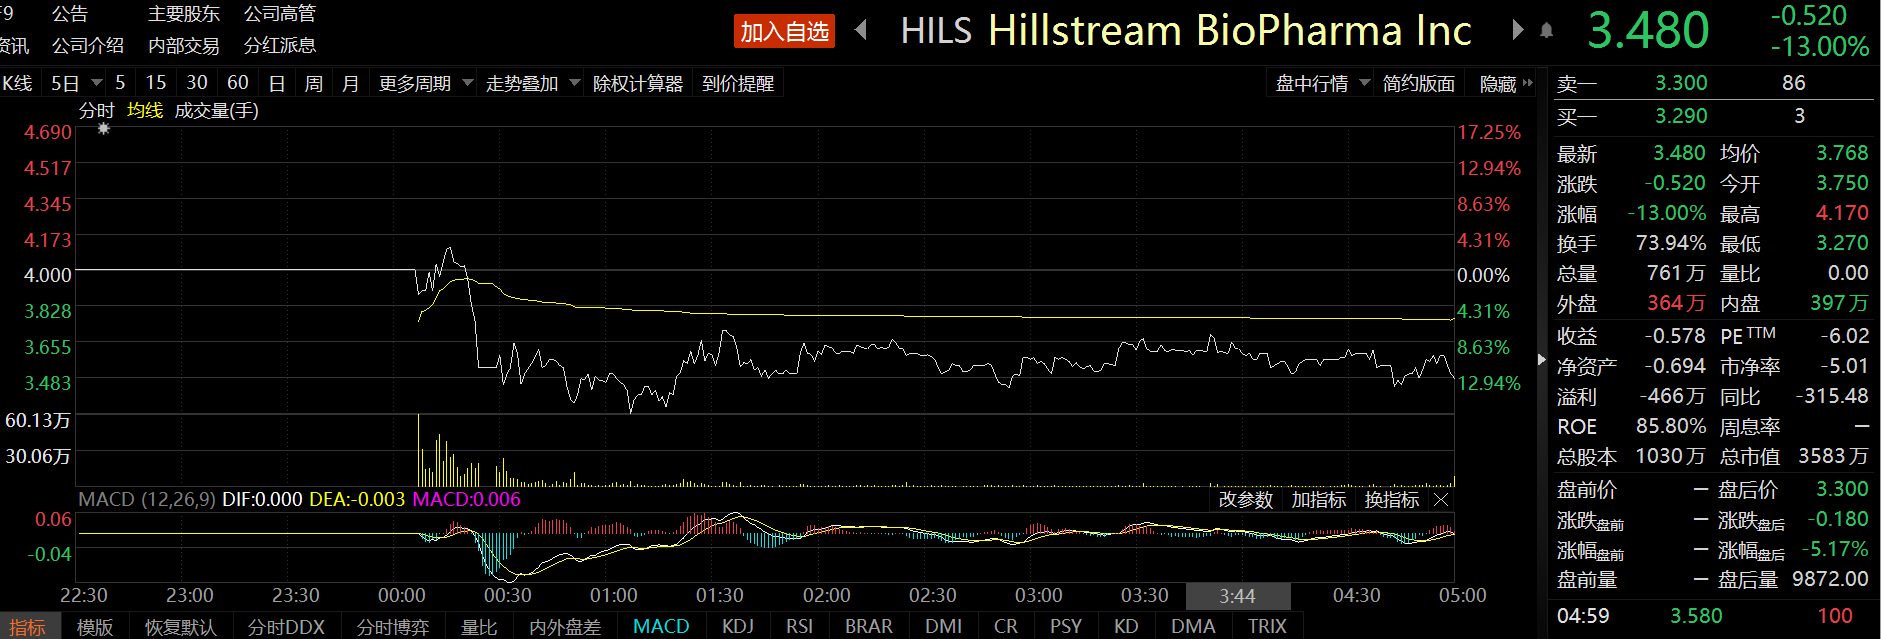 Hillstream登陆纳斯达克 IPO定价为每股4美元